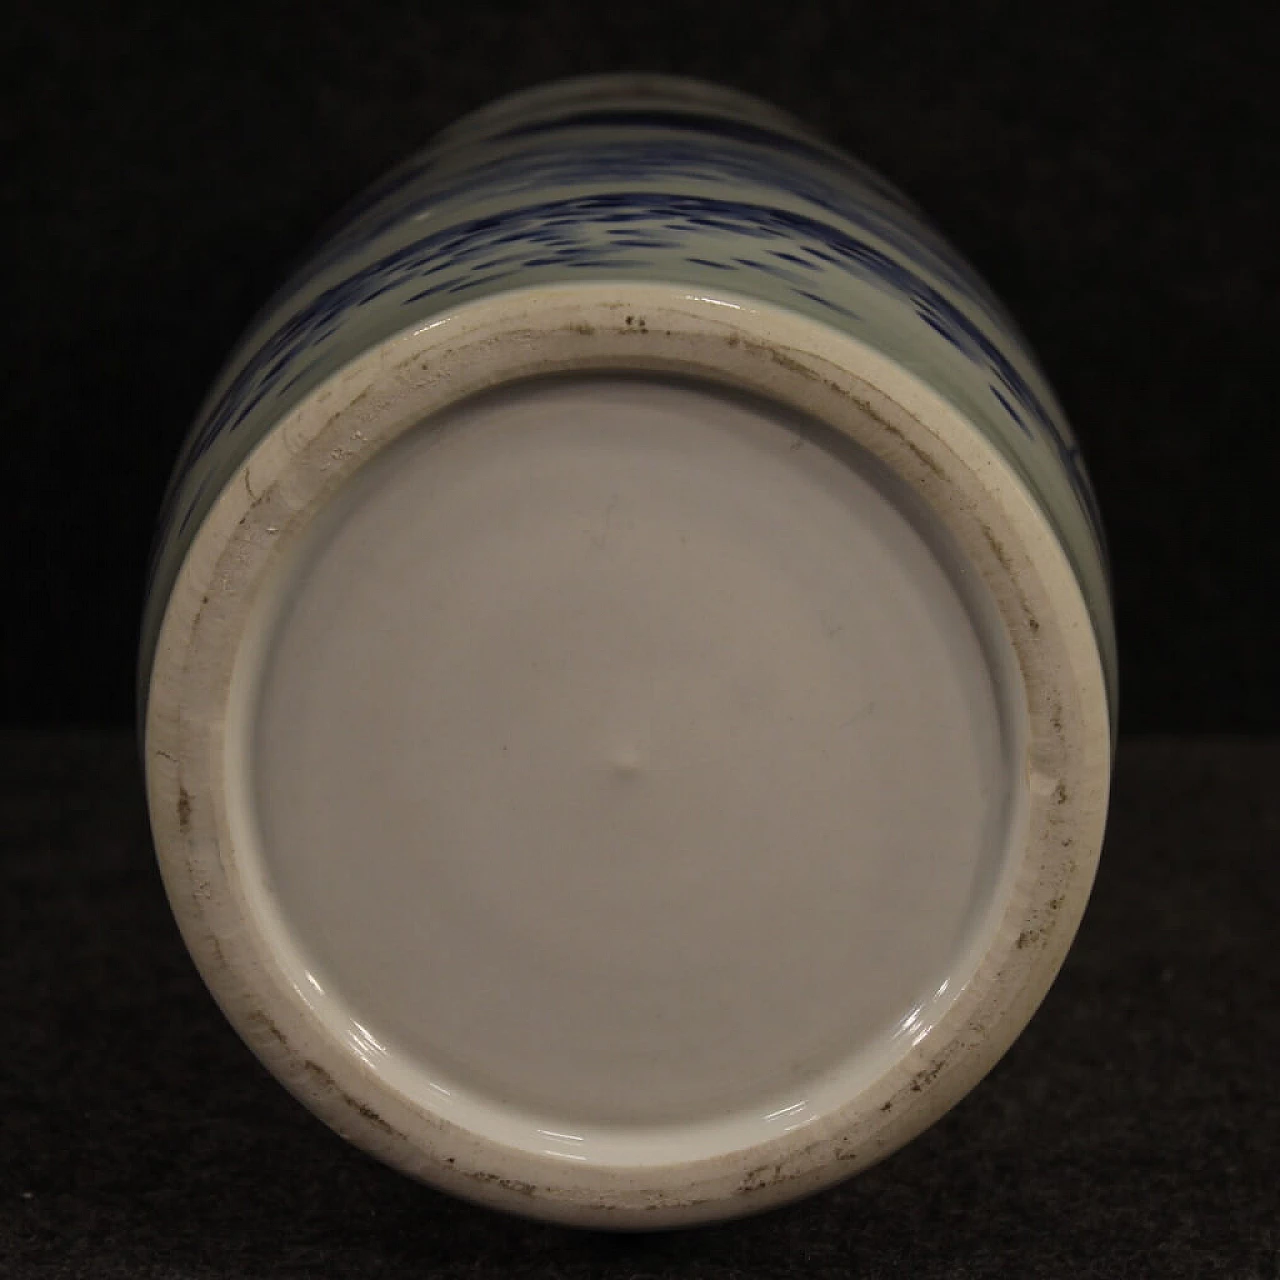 Vaso cinese in ceramica con paesaggio 1108809